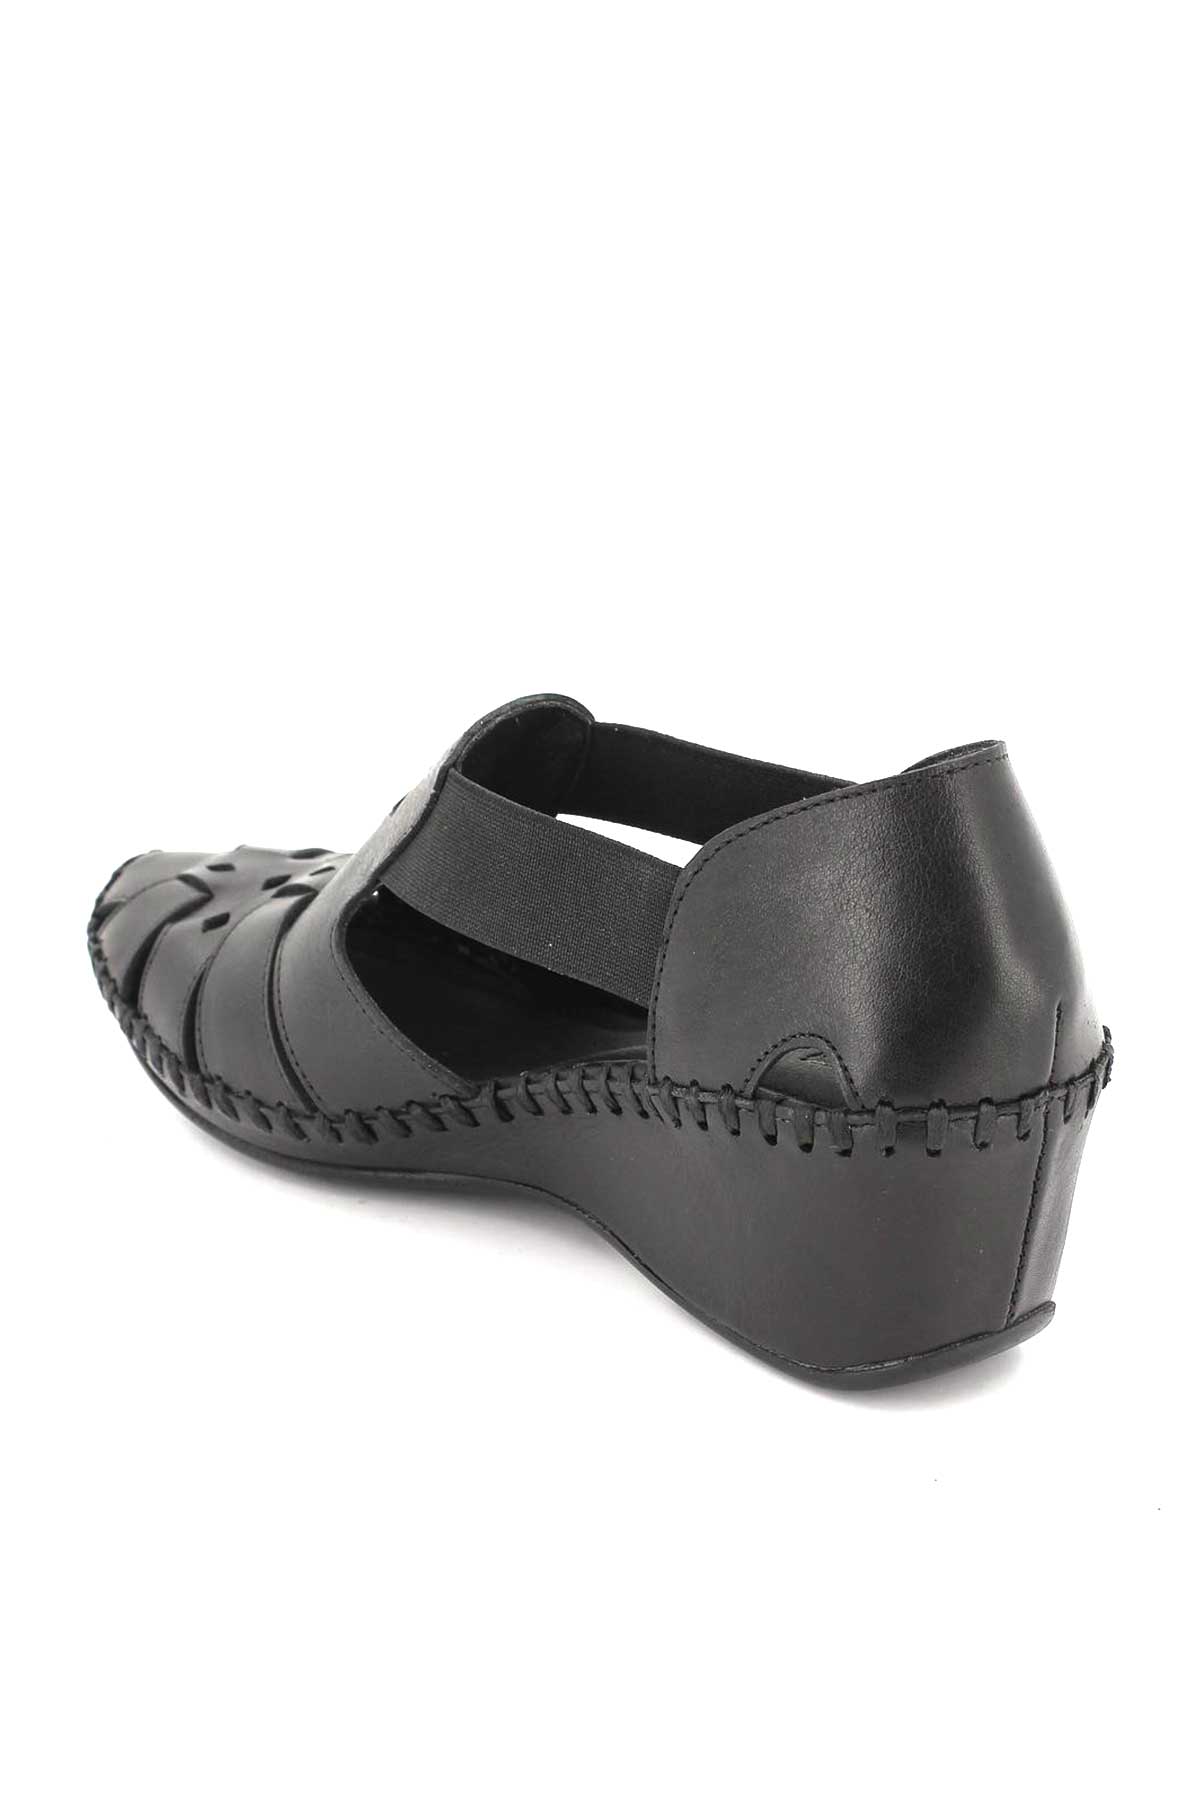 Kadın Comfort Deri Sandalet Siyah 18793056 - Thumbnail